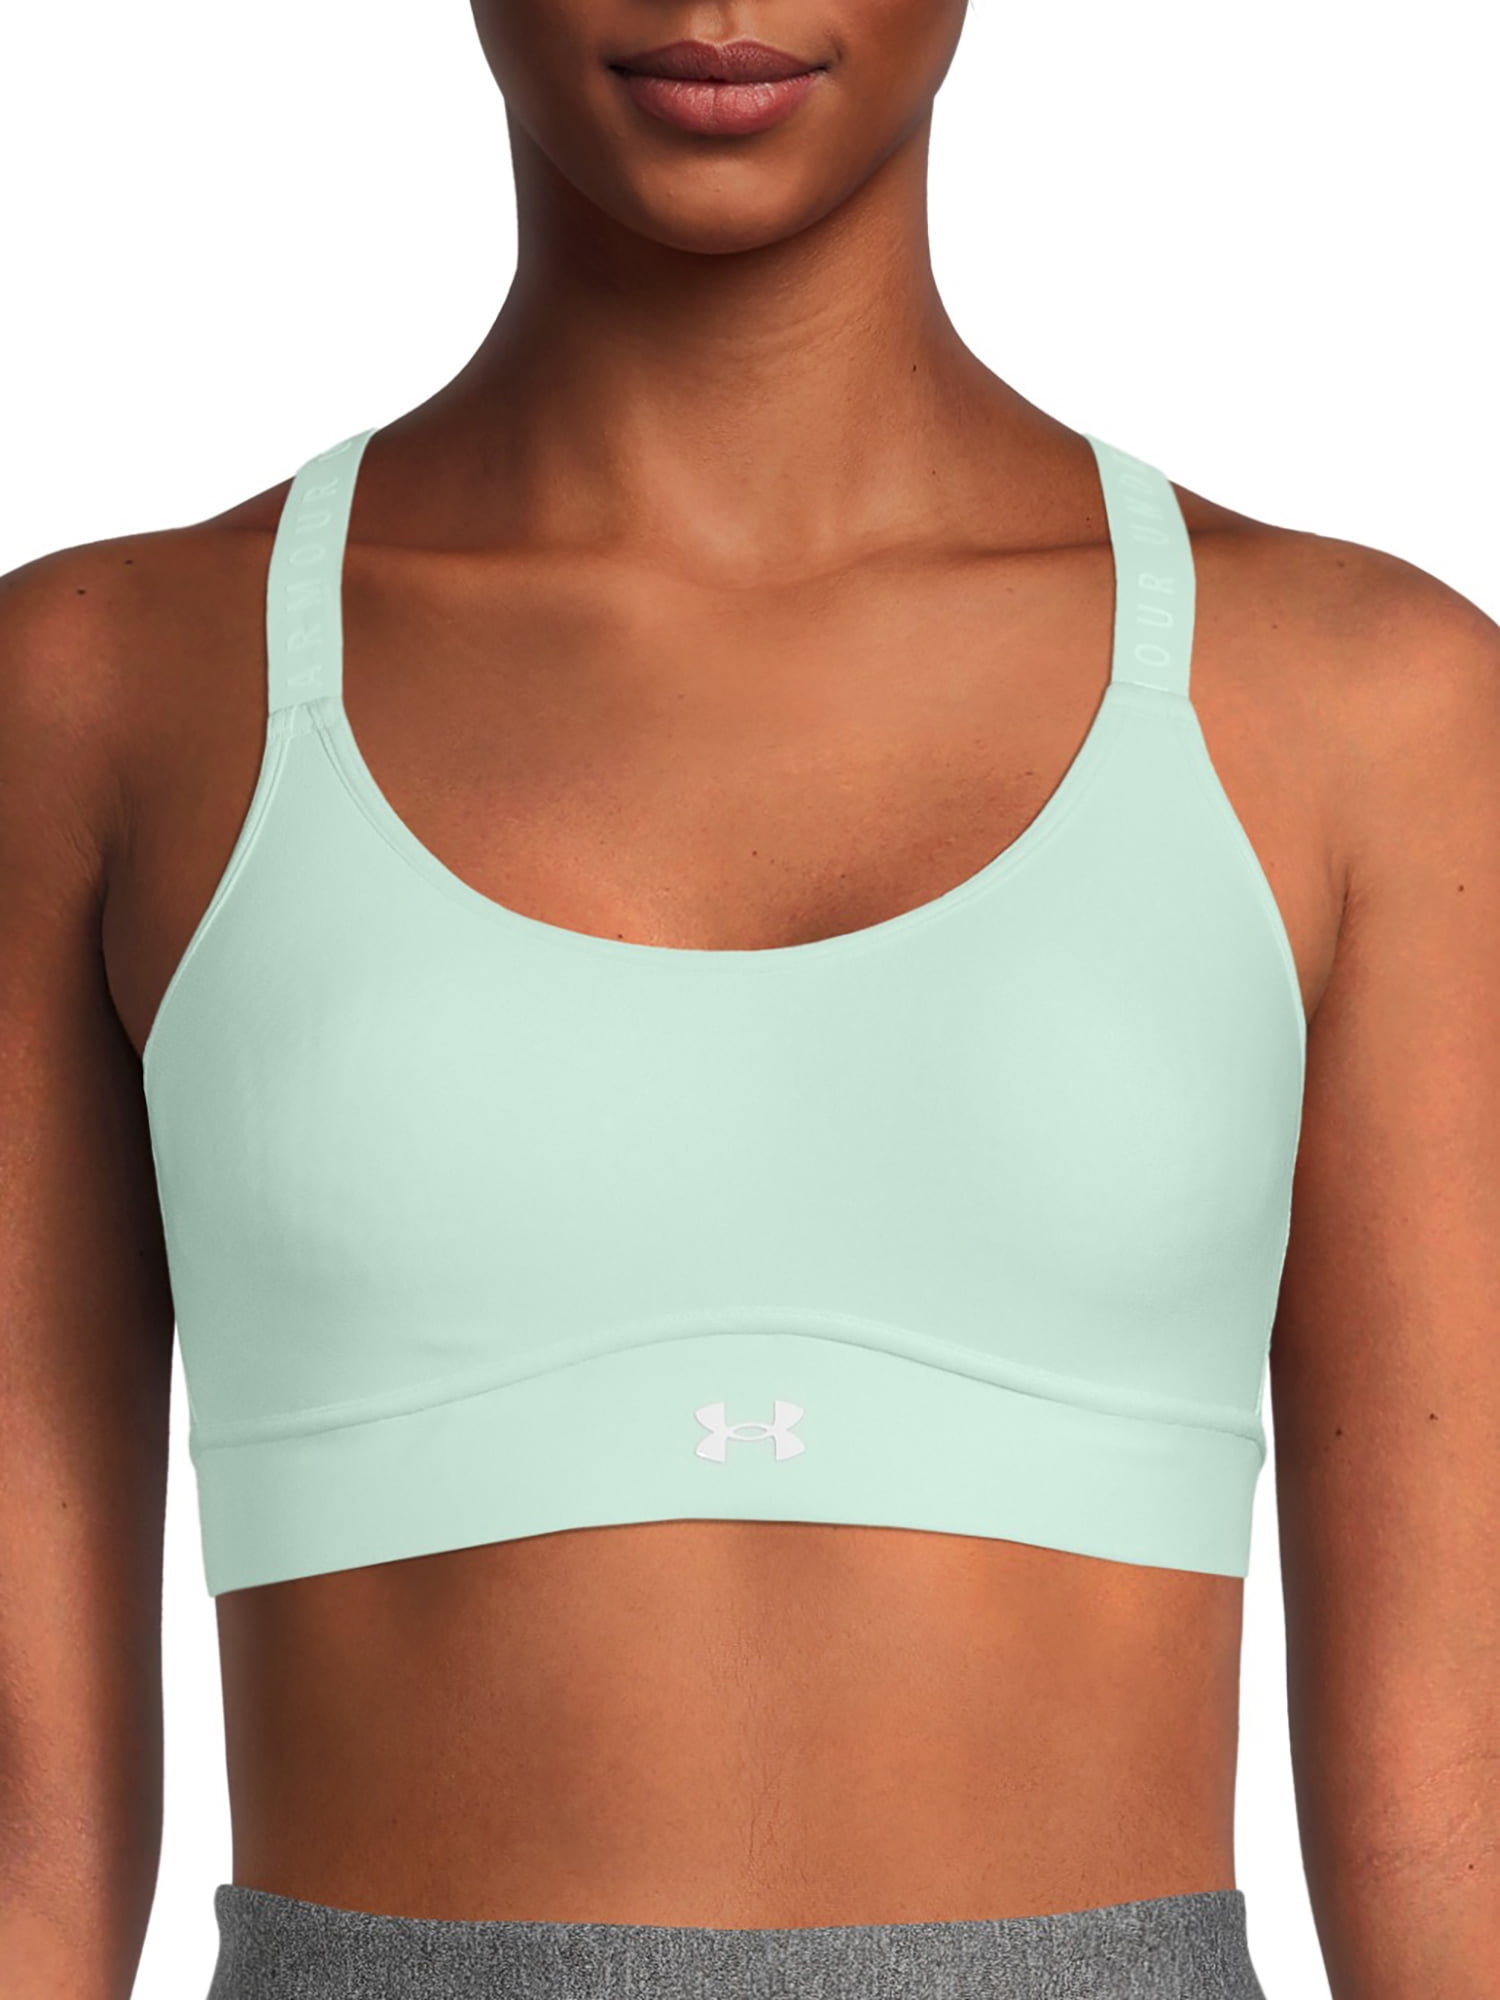  UA Infinity Mid Covered, White - sports bra